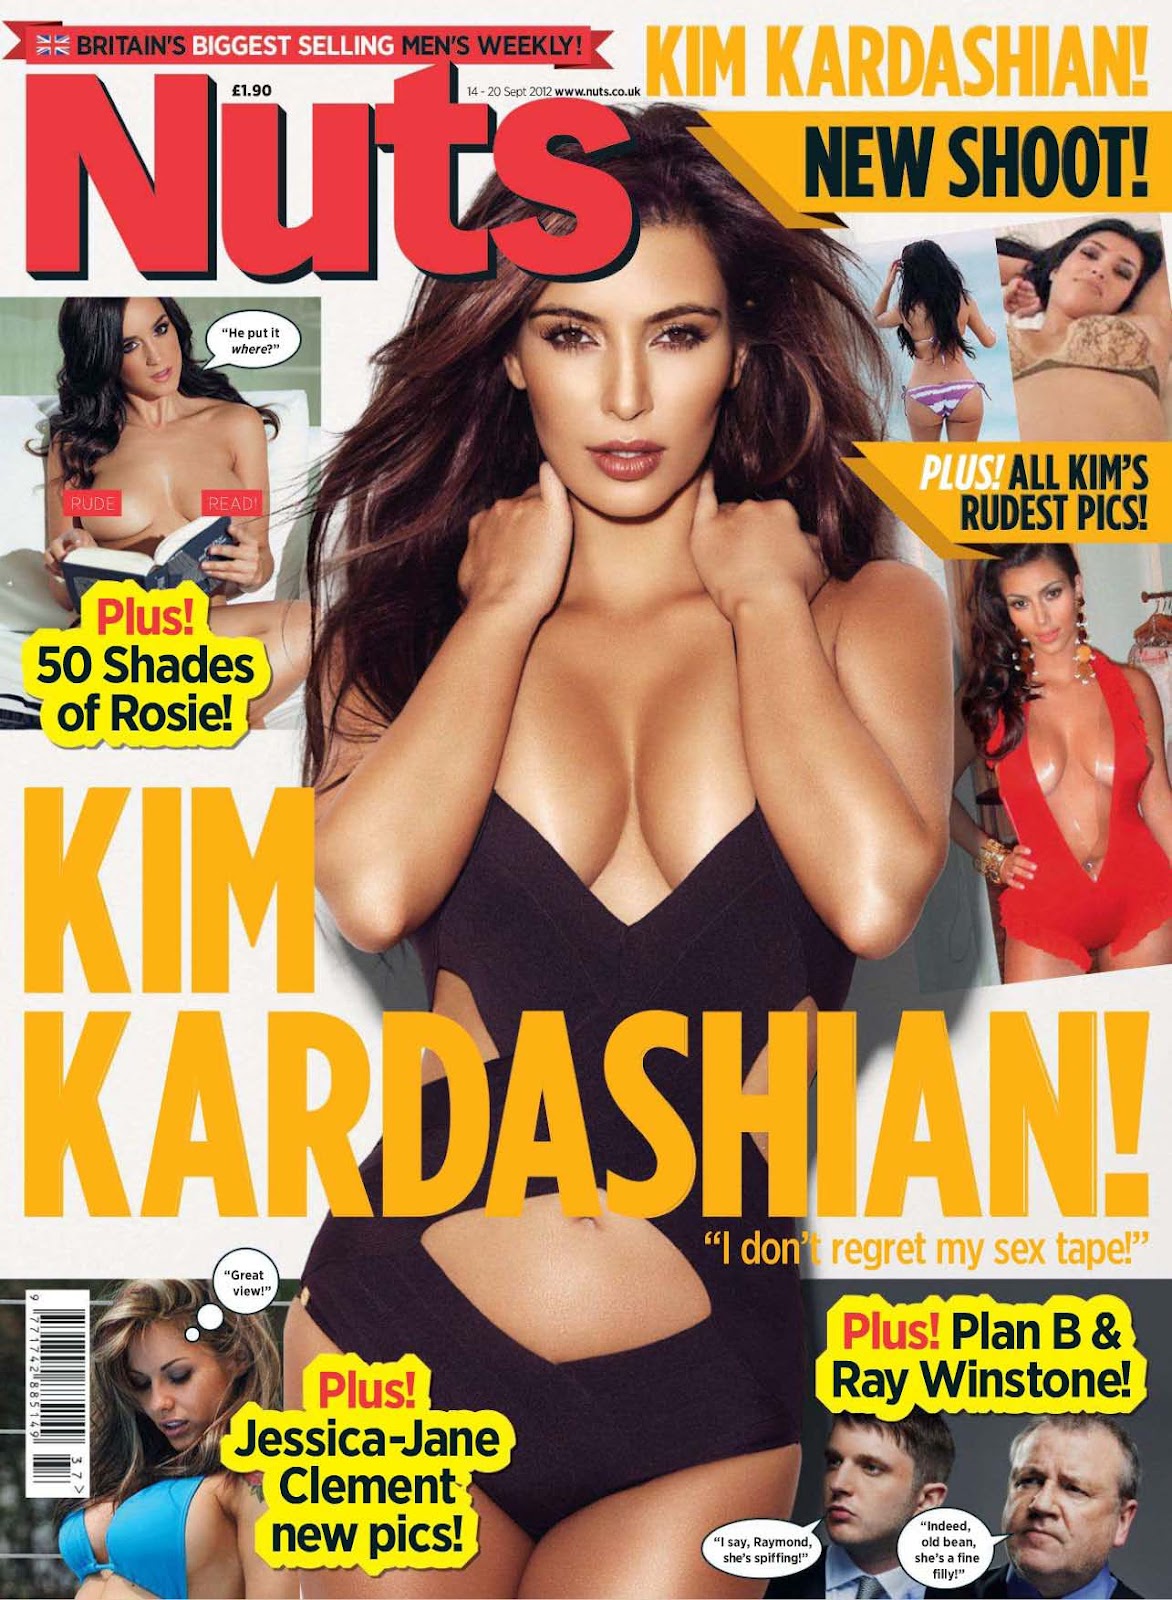 http://3.bp.blogspot.com/-Fabw9yS2cFQ/UFirMPuAAAI/AAAAAAAA_GE/ddSArt7t-w0/s1600/Kim+Kardashian+in+Nuts-07.jpg